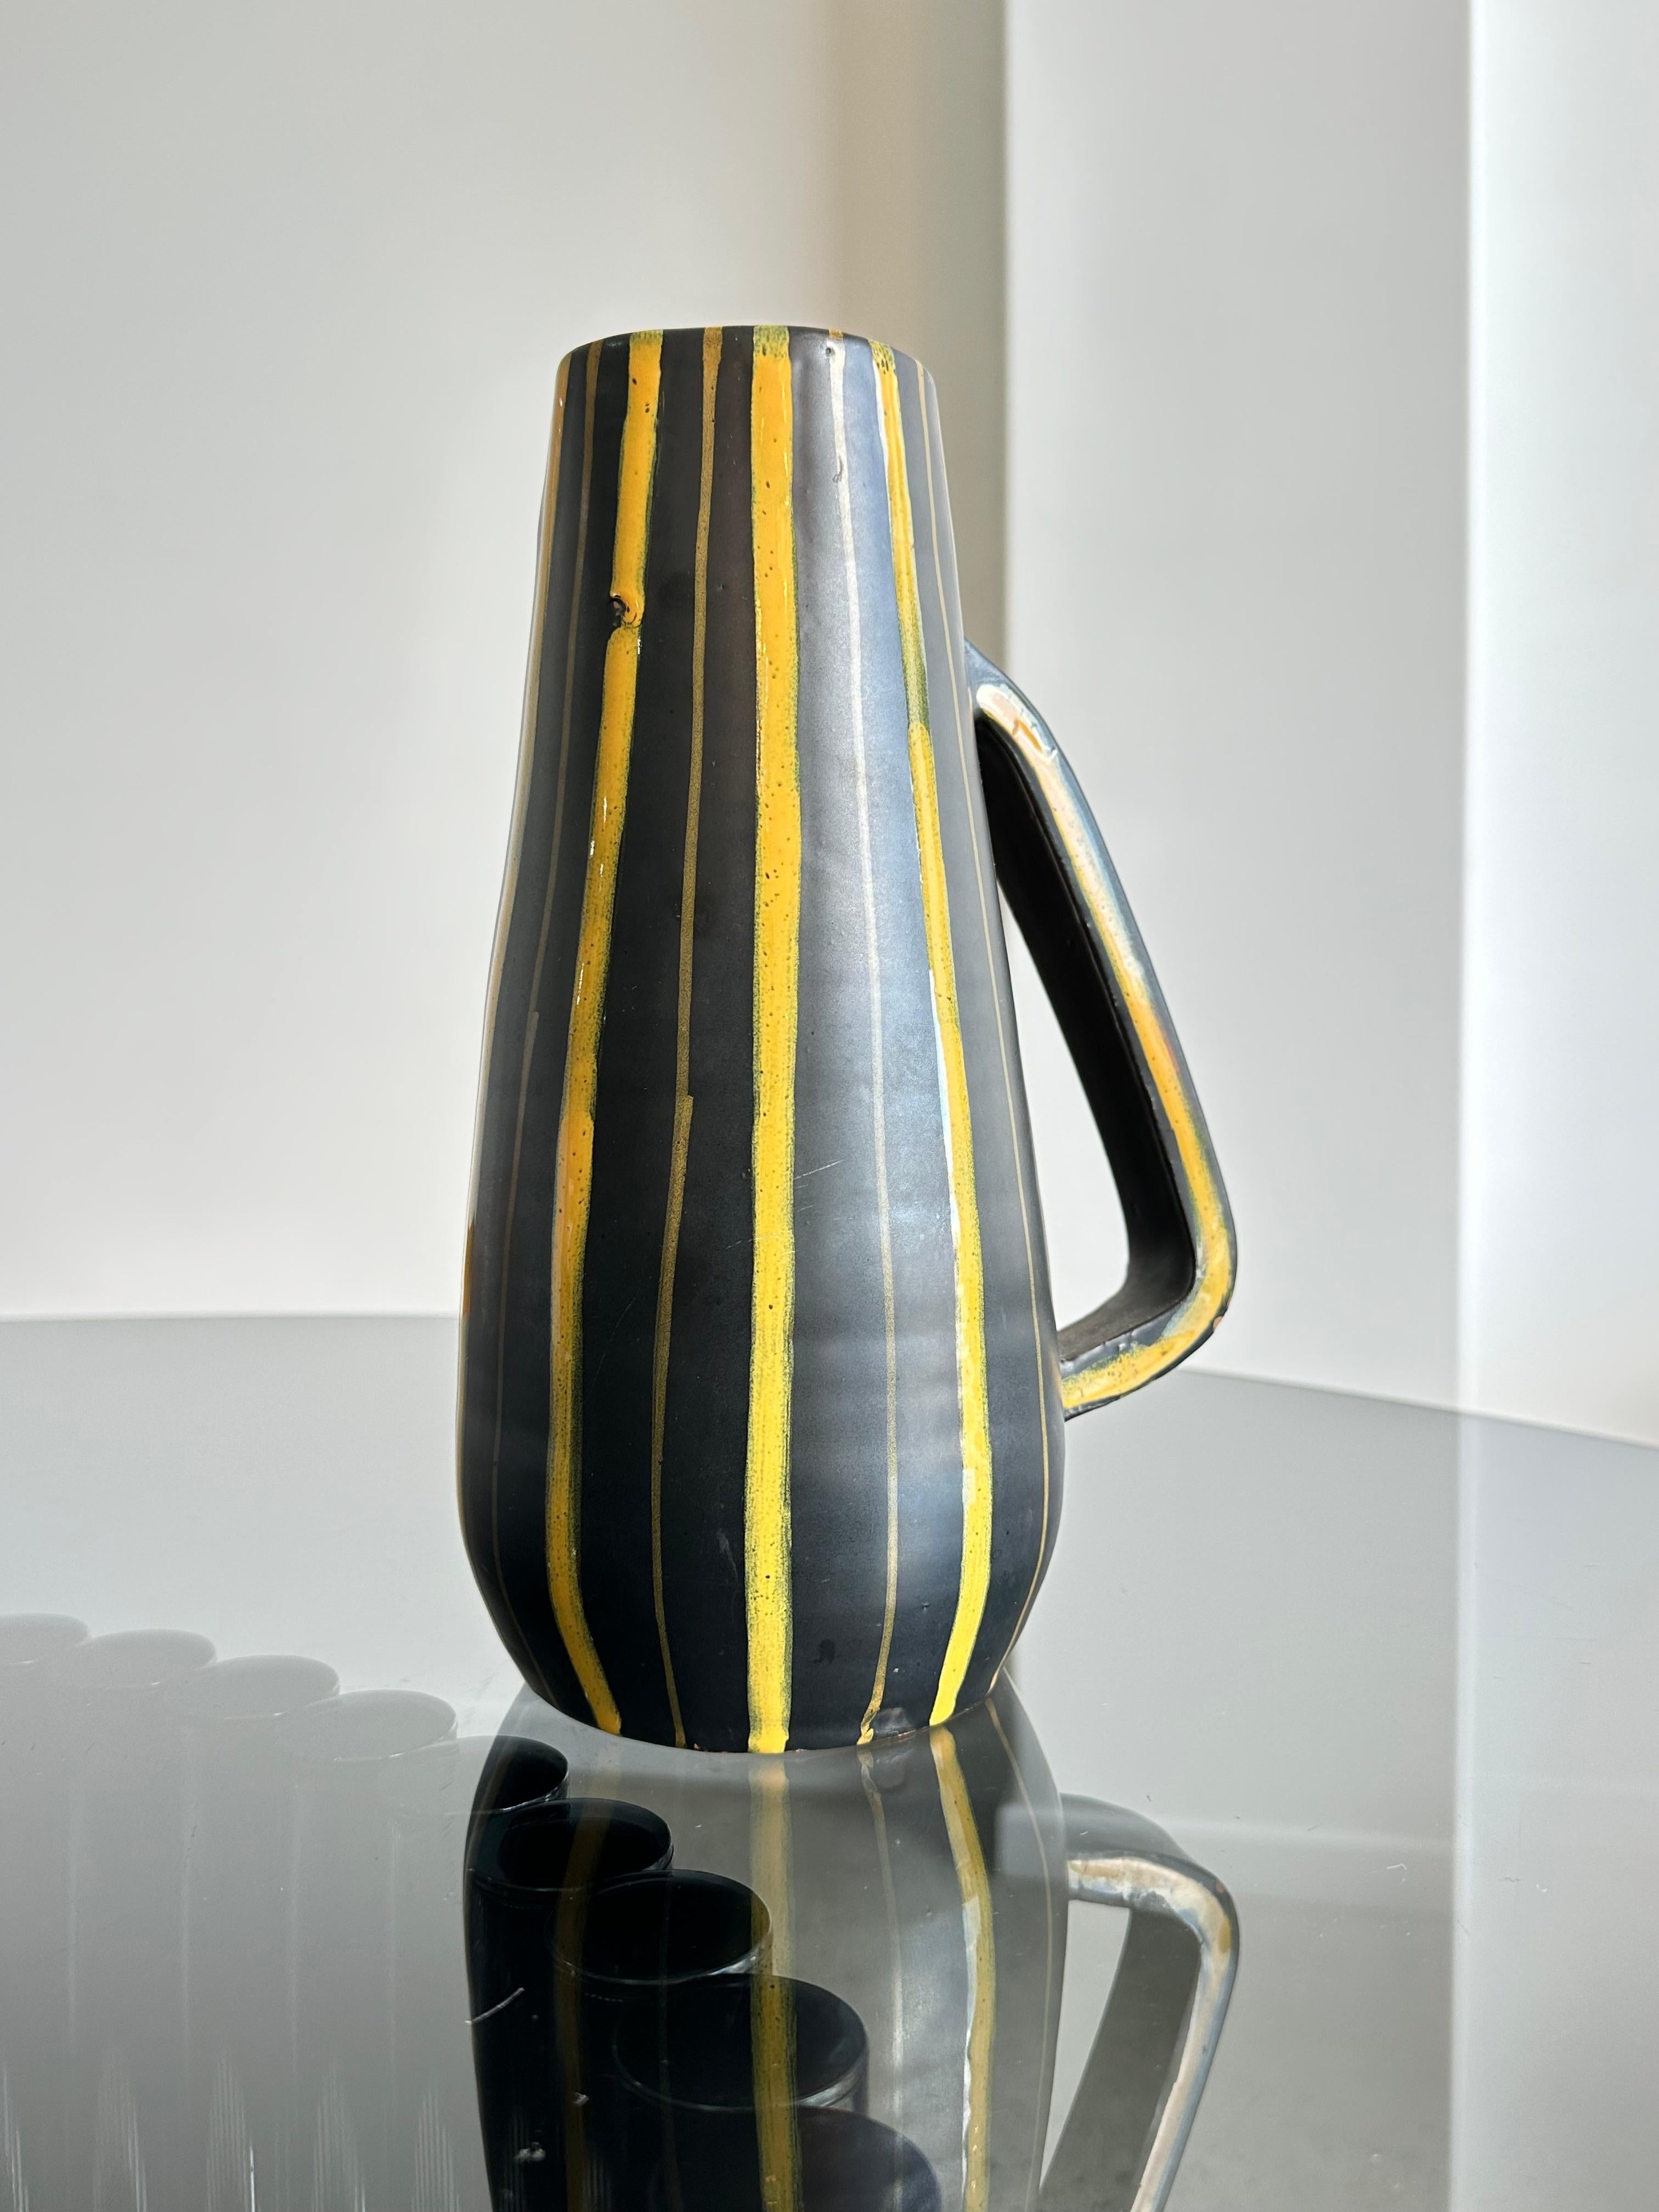 Italian Bitossi glazed ceramic vase with yellow an black stripes. 